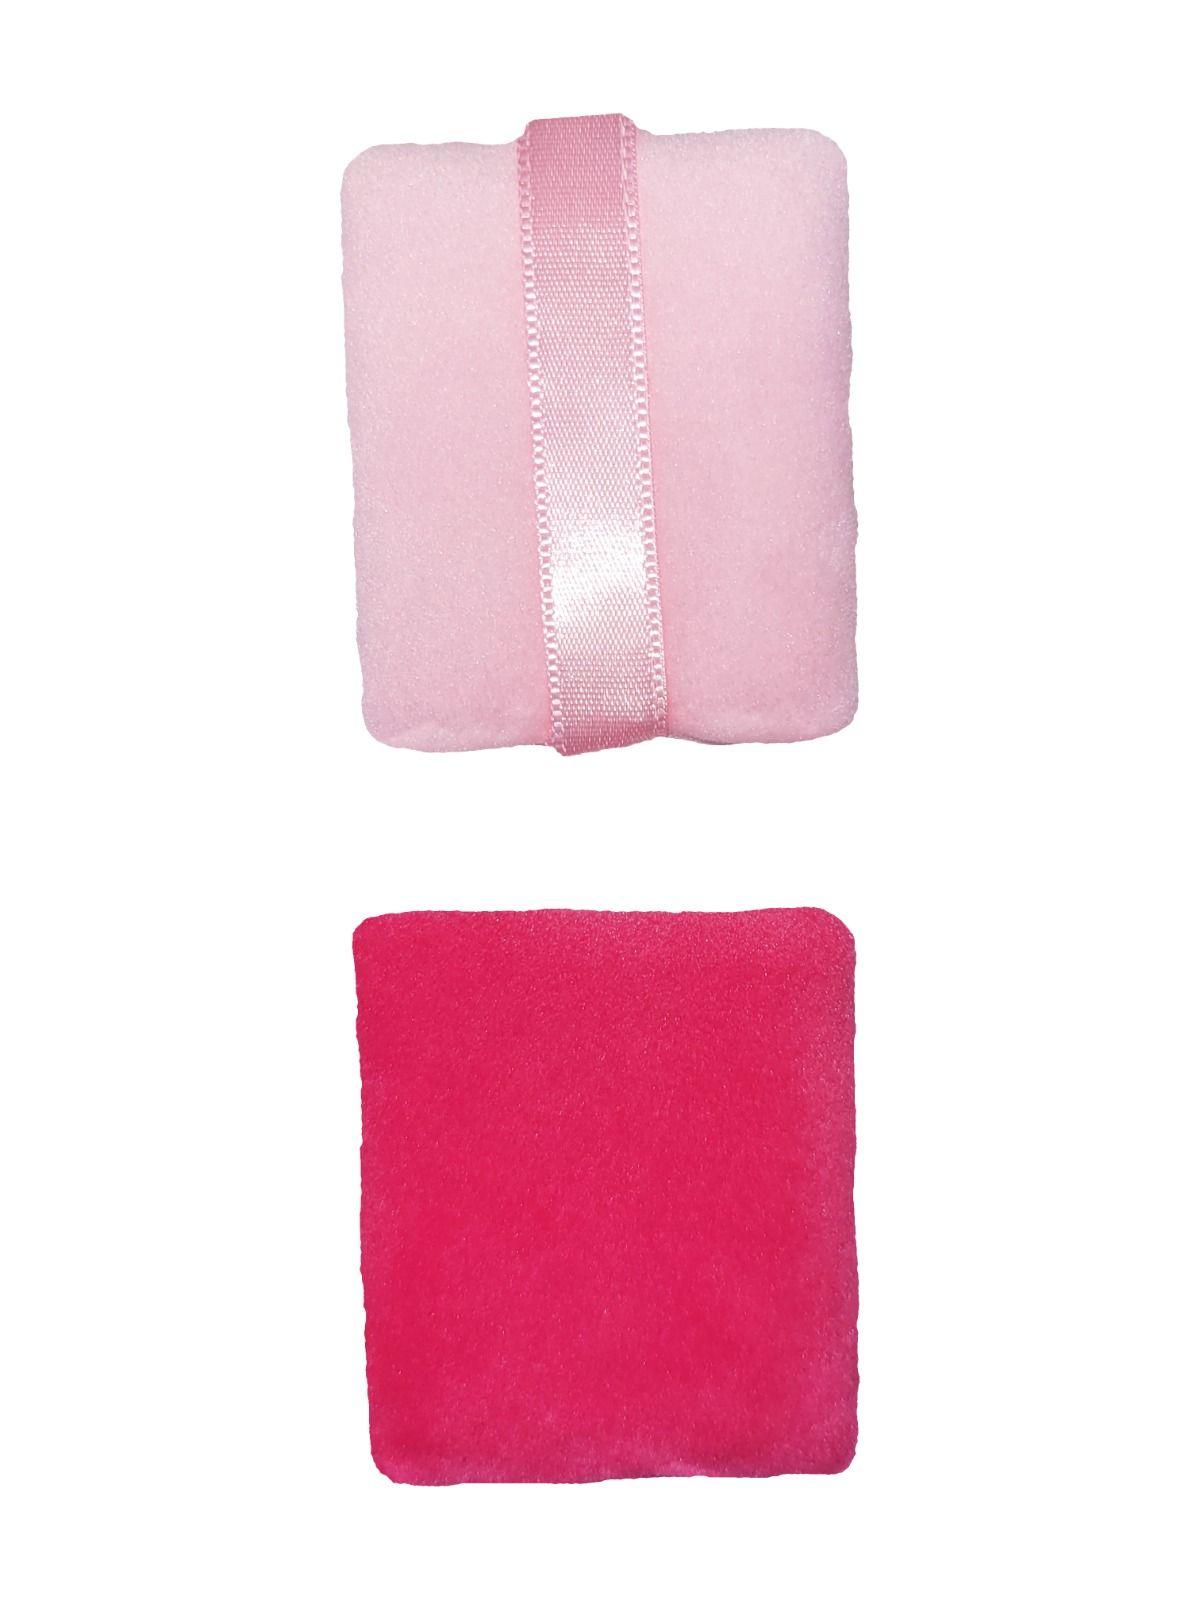 Flat makeup sponge BLING - rectangular, 2 pcs.